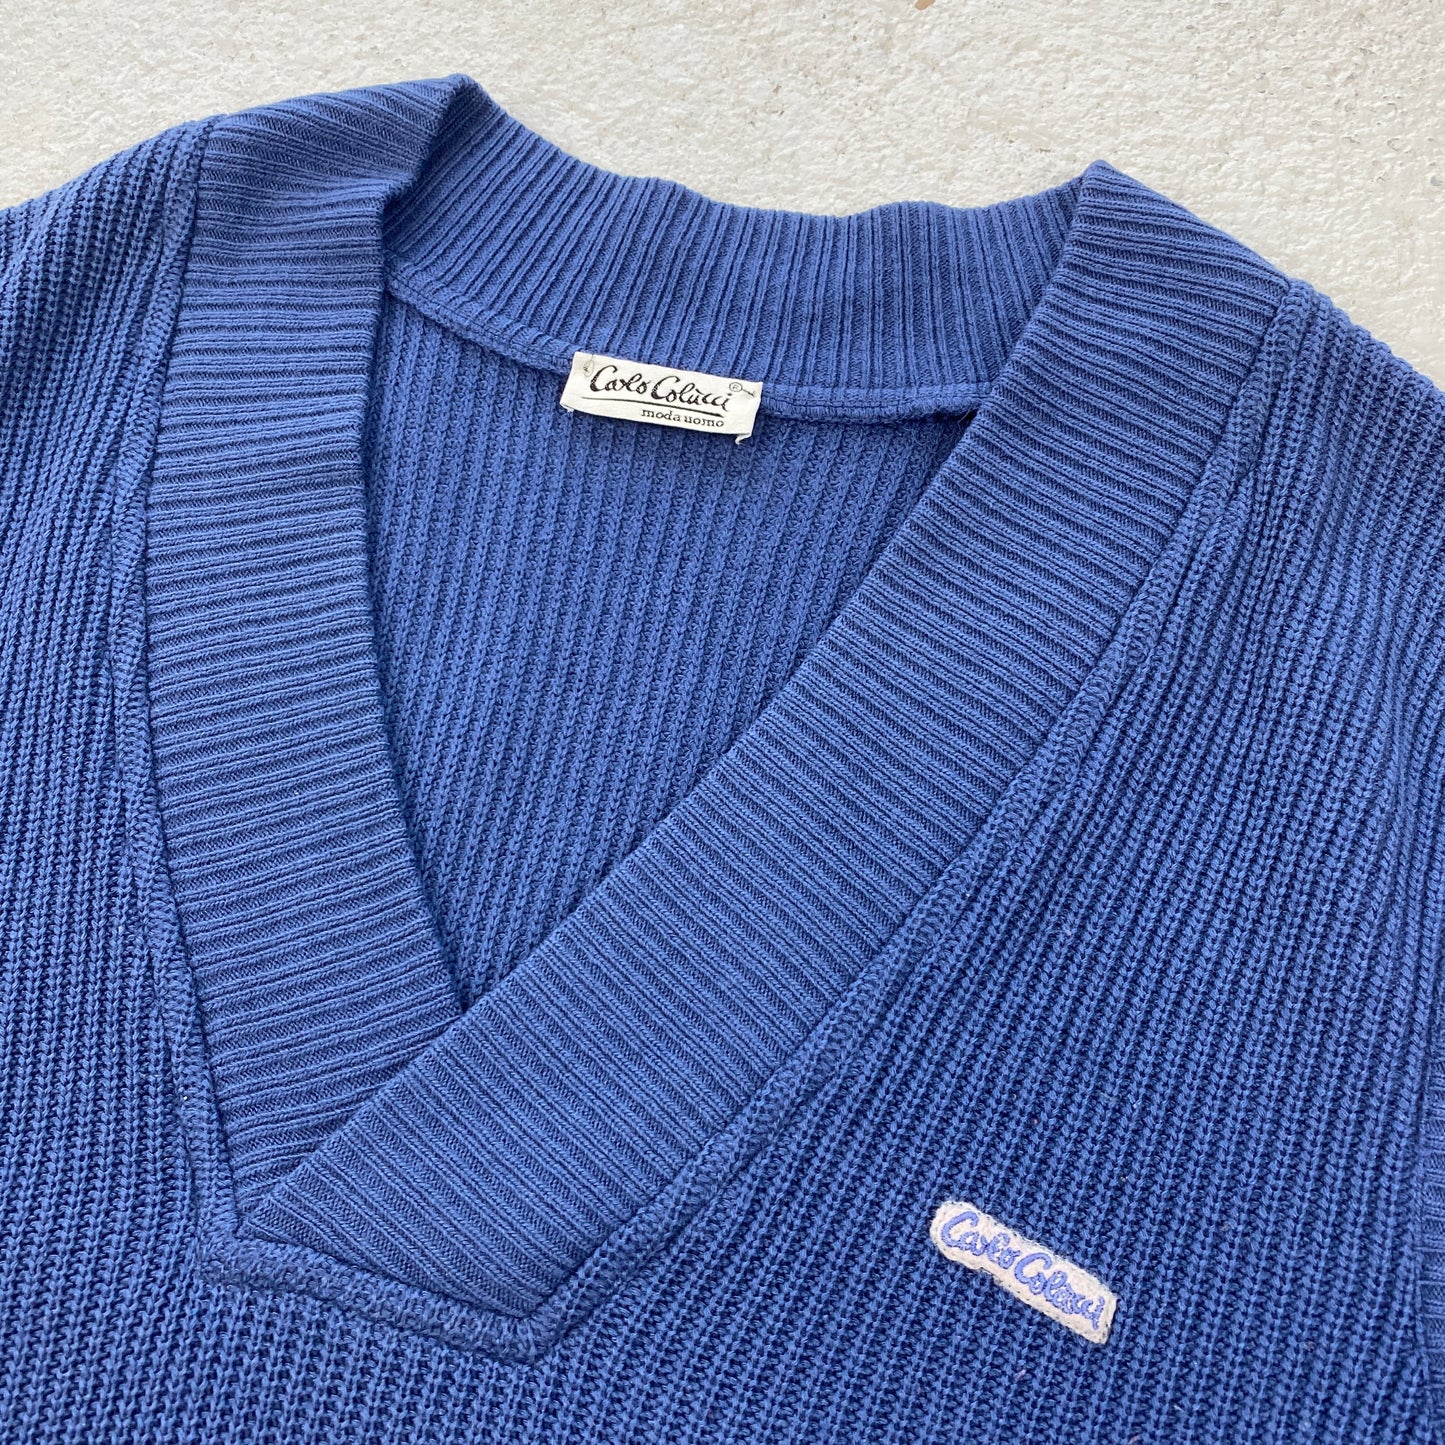 Carlo Colucci knit sweater (L-XL)